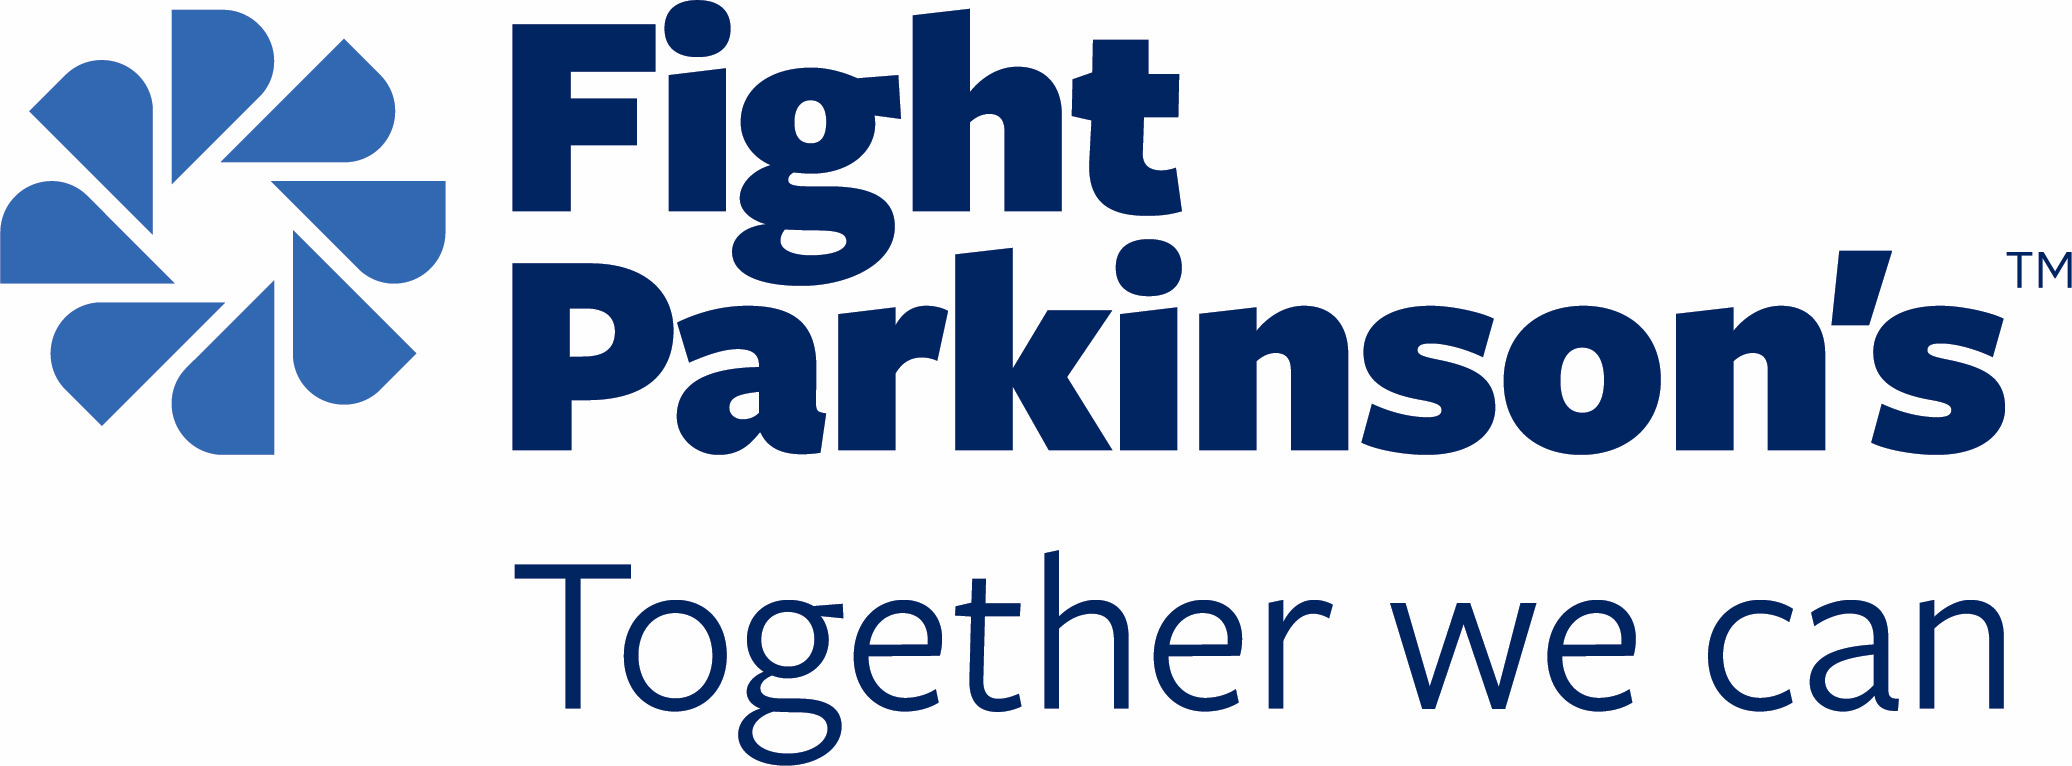 Fight Parkinson's logo